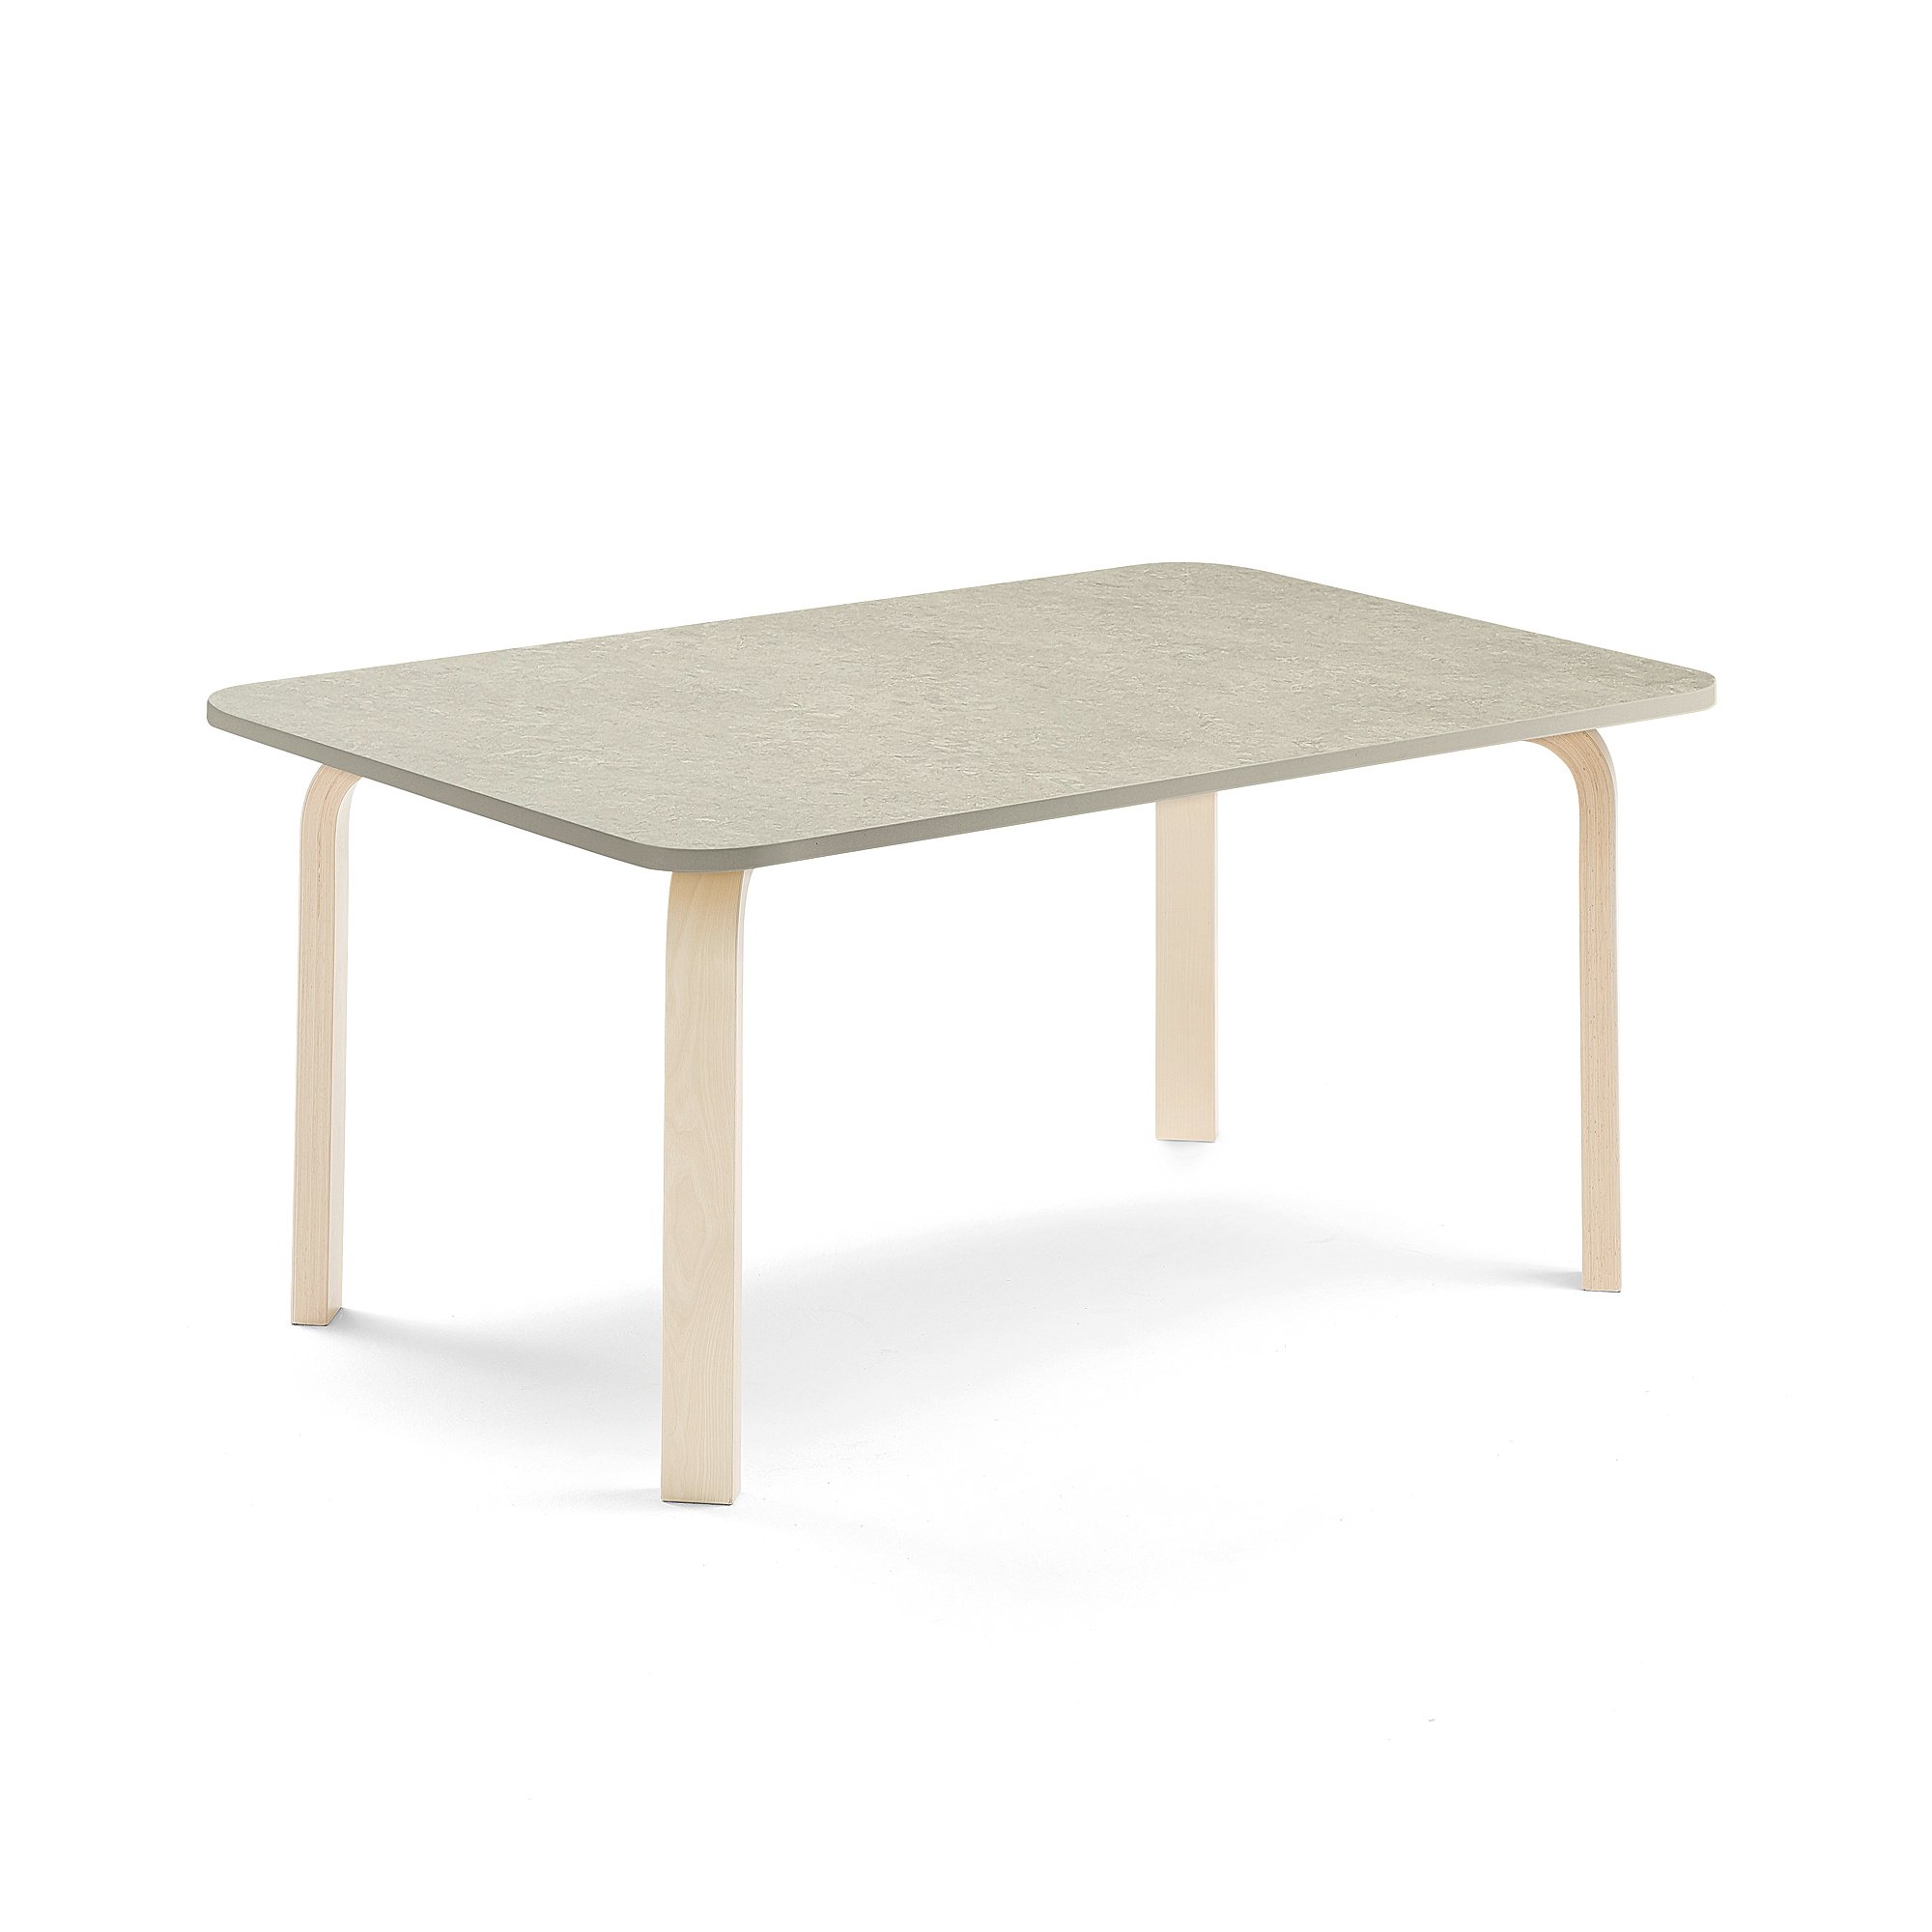 Stůl ELTON, 1200x600x530 mm, bříza, akustické linoleum, šedá